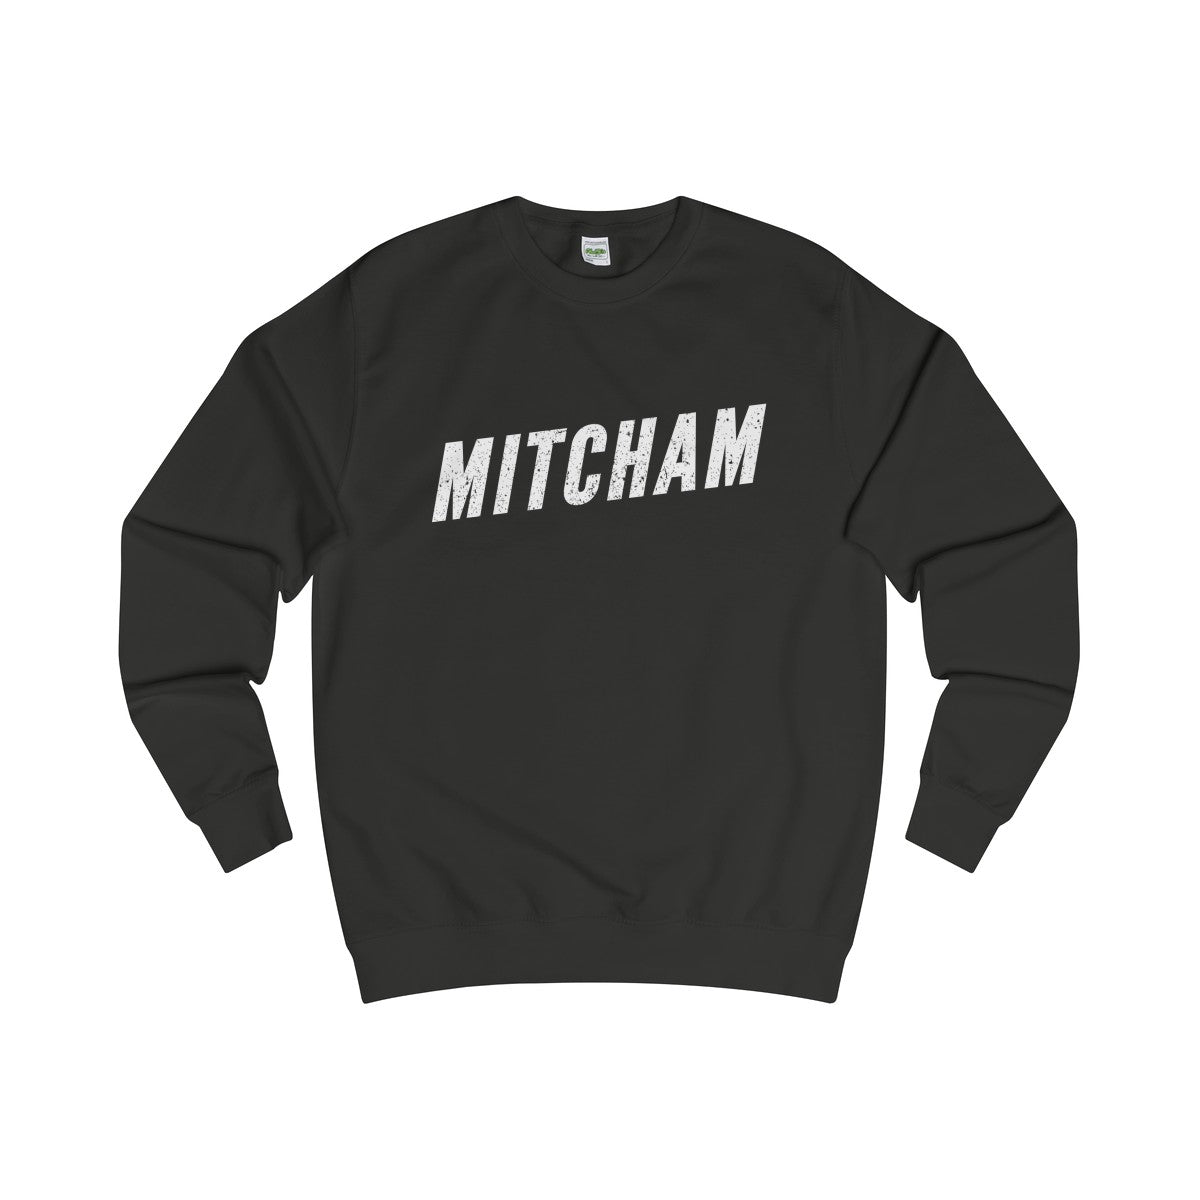 Mitcham Sweater